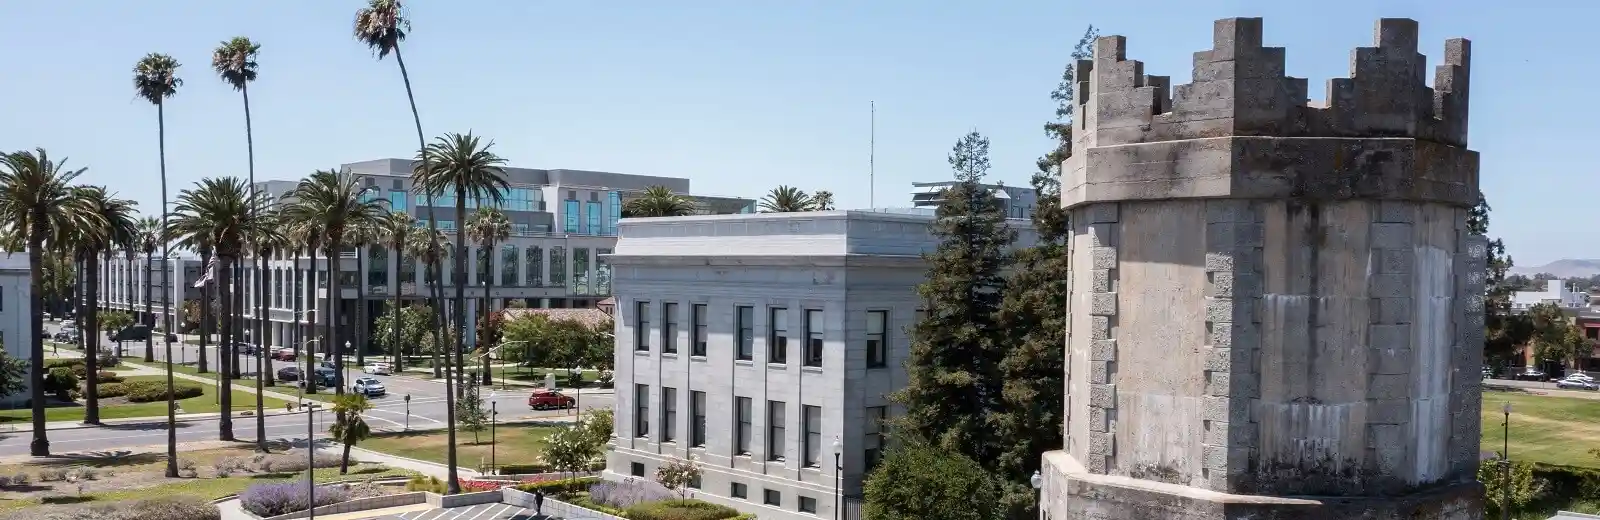 California state university, los angeles - california state university, los angeles.